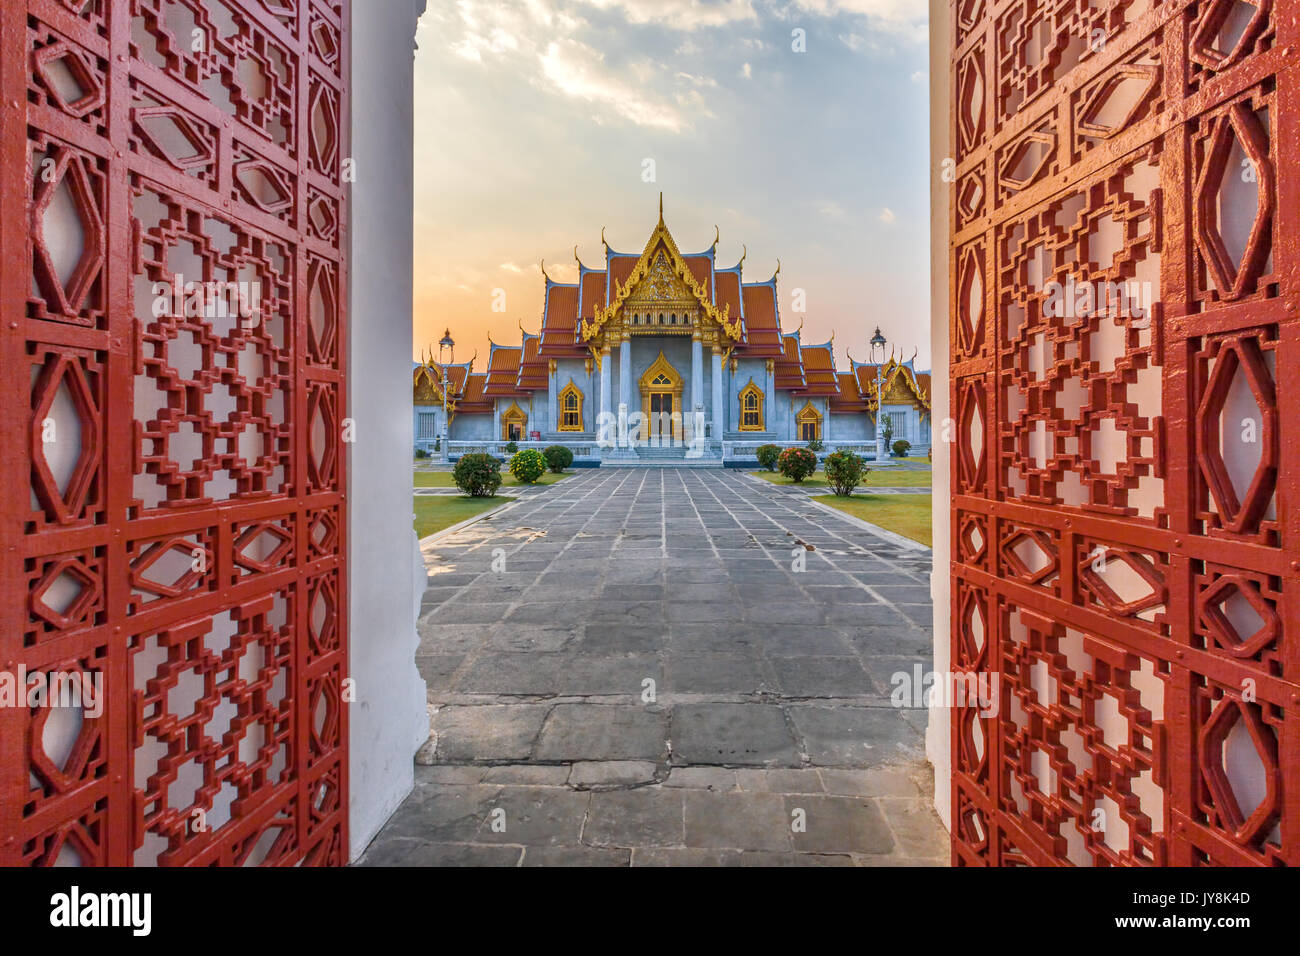 Ingresso al tempio in marmo, Wat Benchamabophit, Bangkok, Thailandia Foto Stock